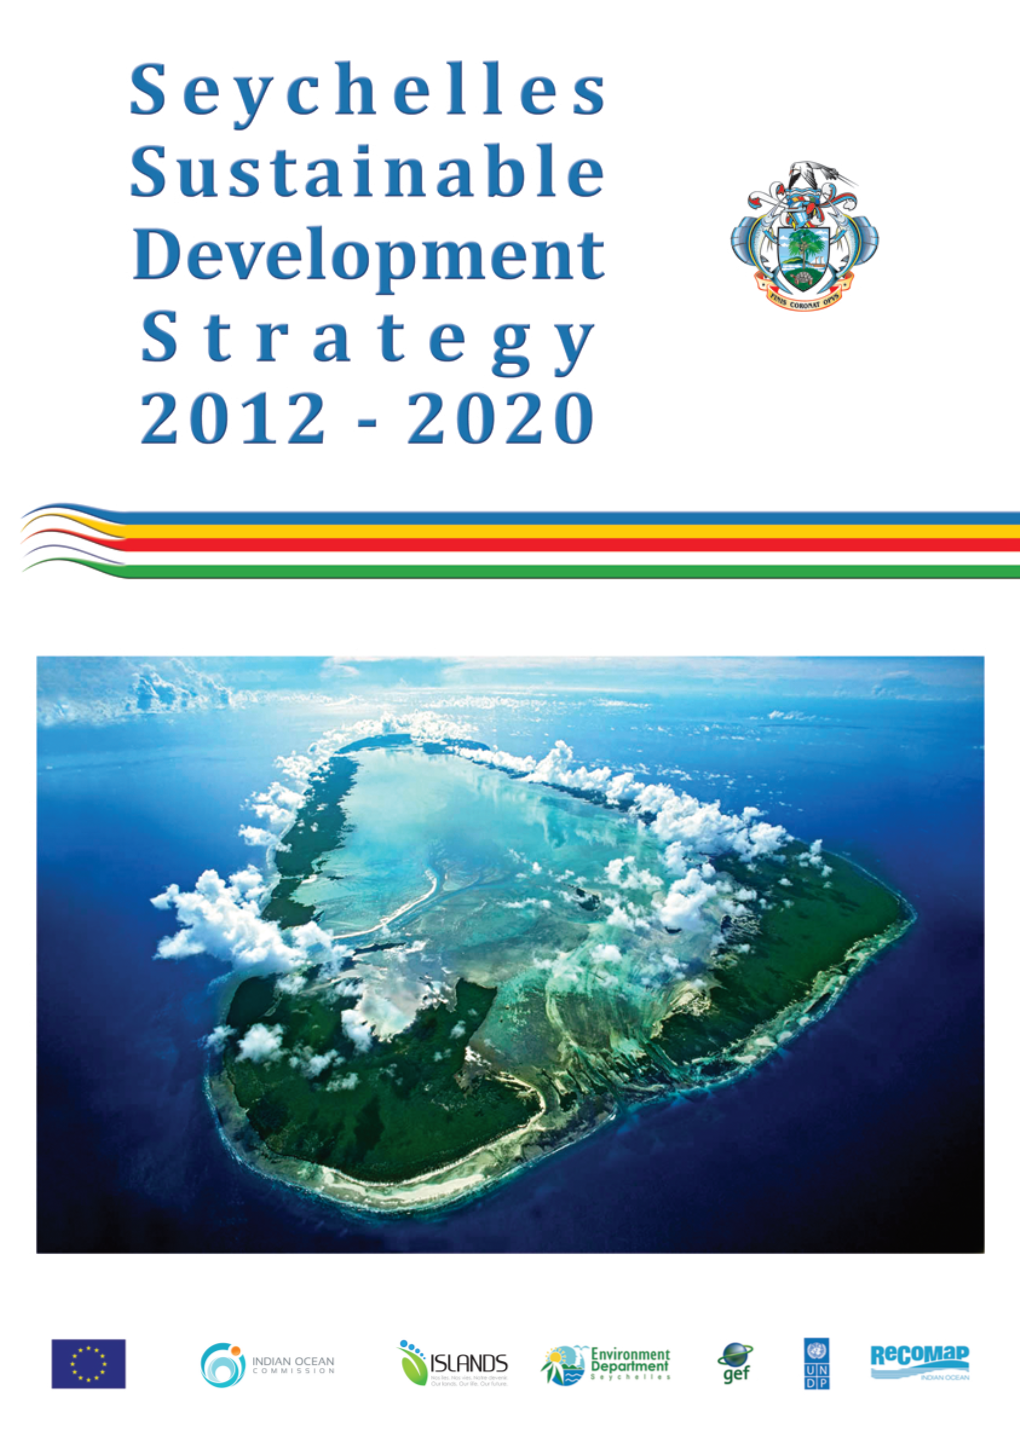 Seychelles Sustainable Development Strategy 2012-2020